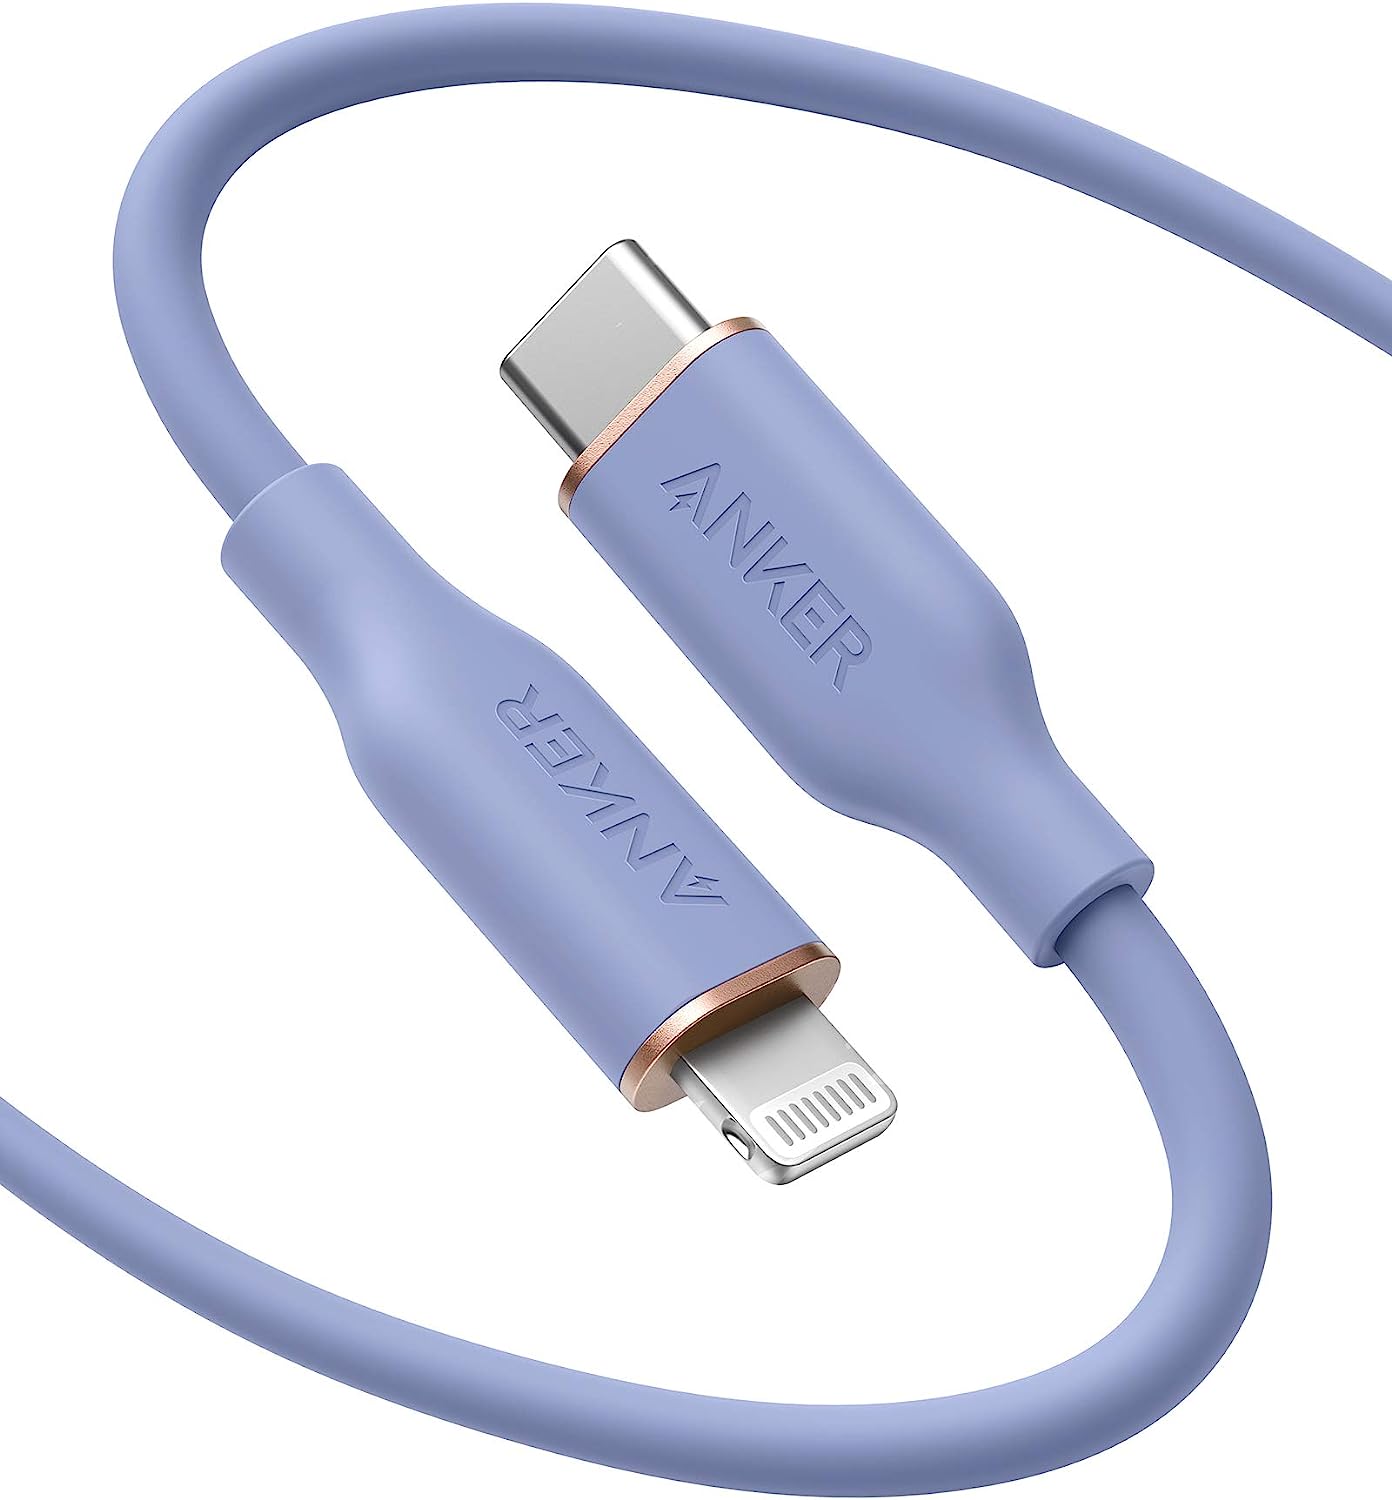 Anker PowerLine III Flow USB-C & ライトニング ケーブル MFi認証 PD対応 シリコン素材採用 iPhone 各種対応 (1.8m) アンカー